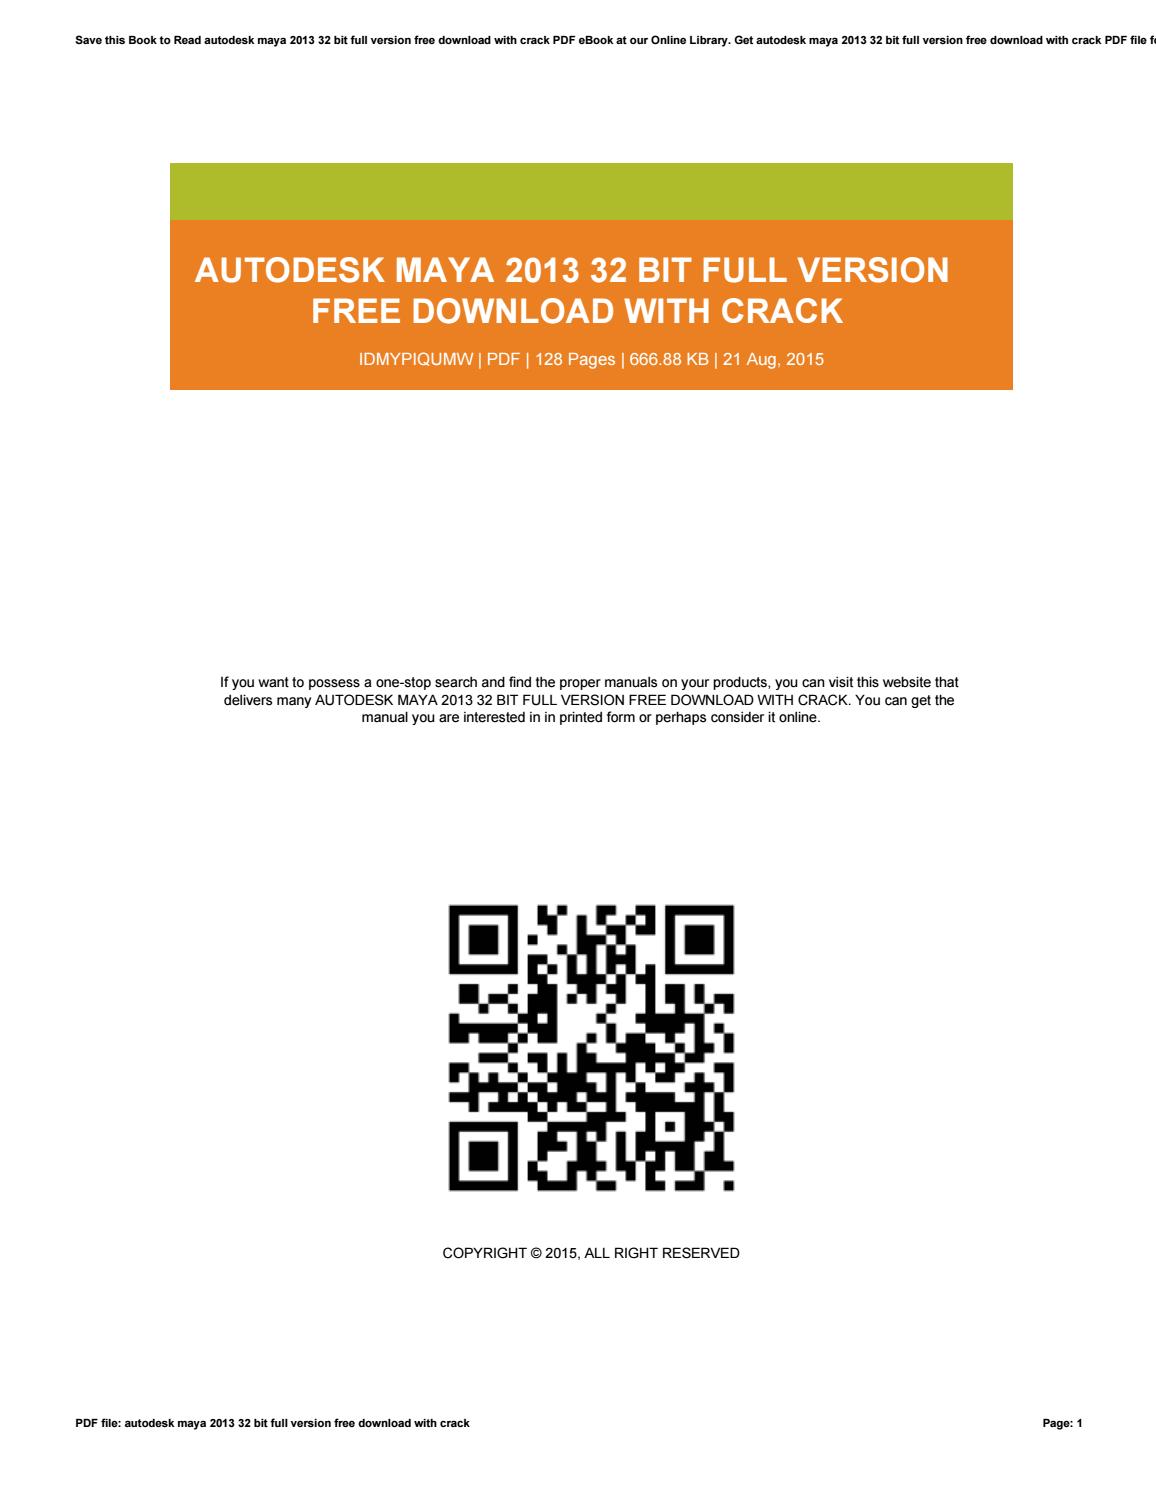 Autodesk Maya 2013 64 Bit Crack Download